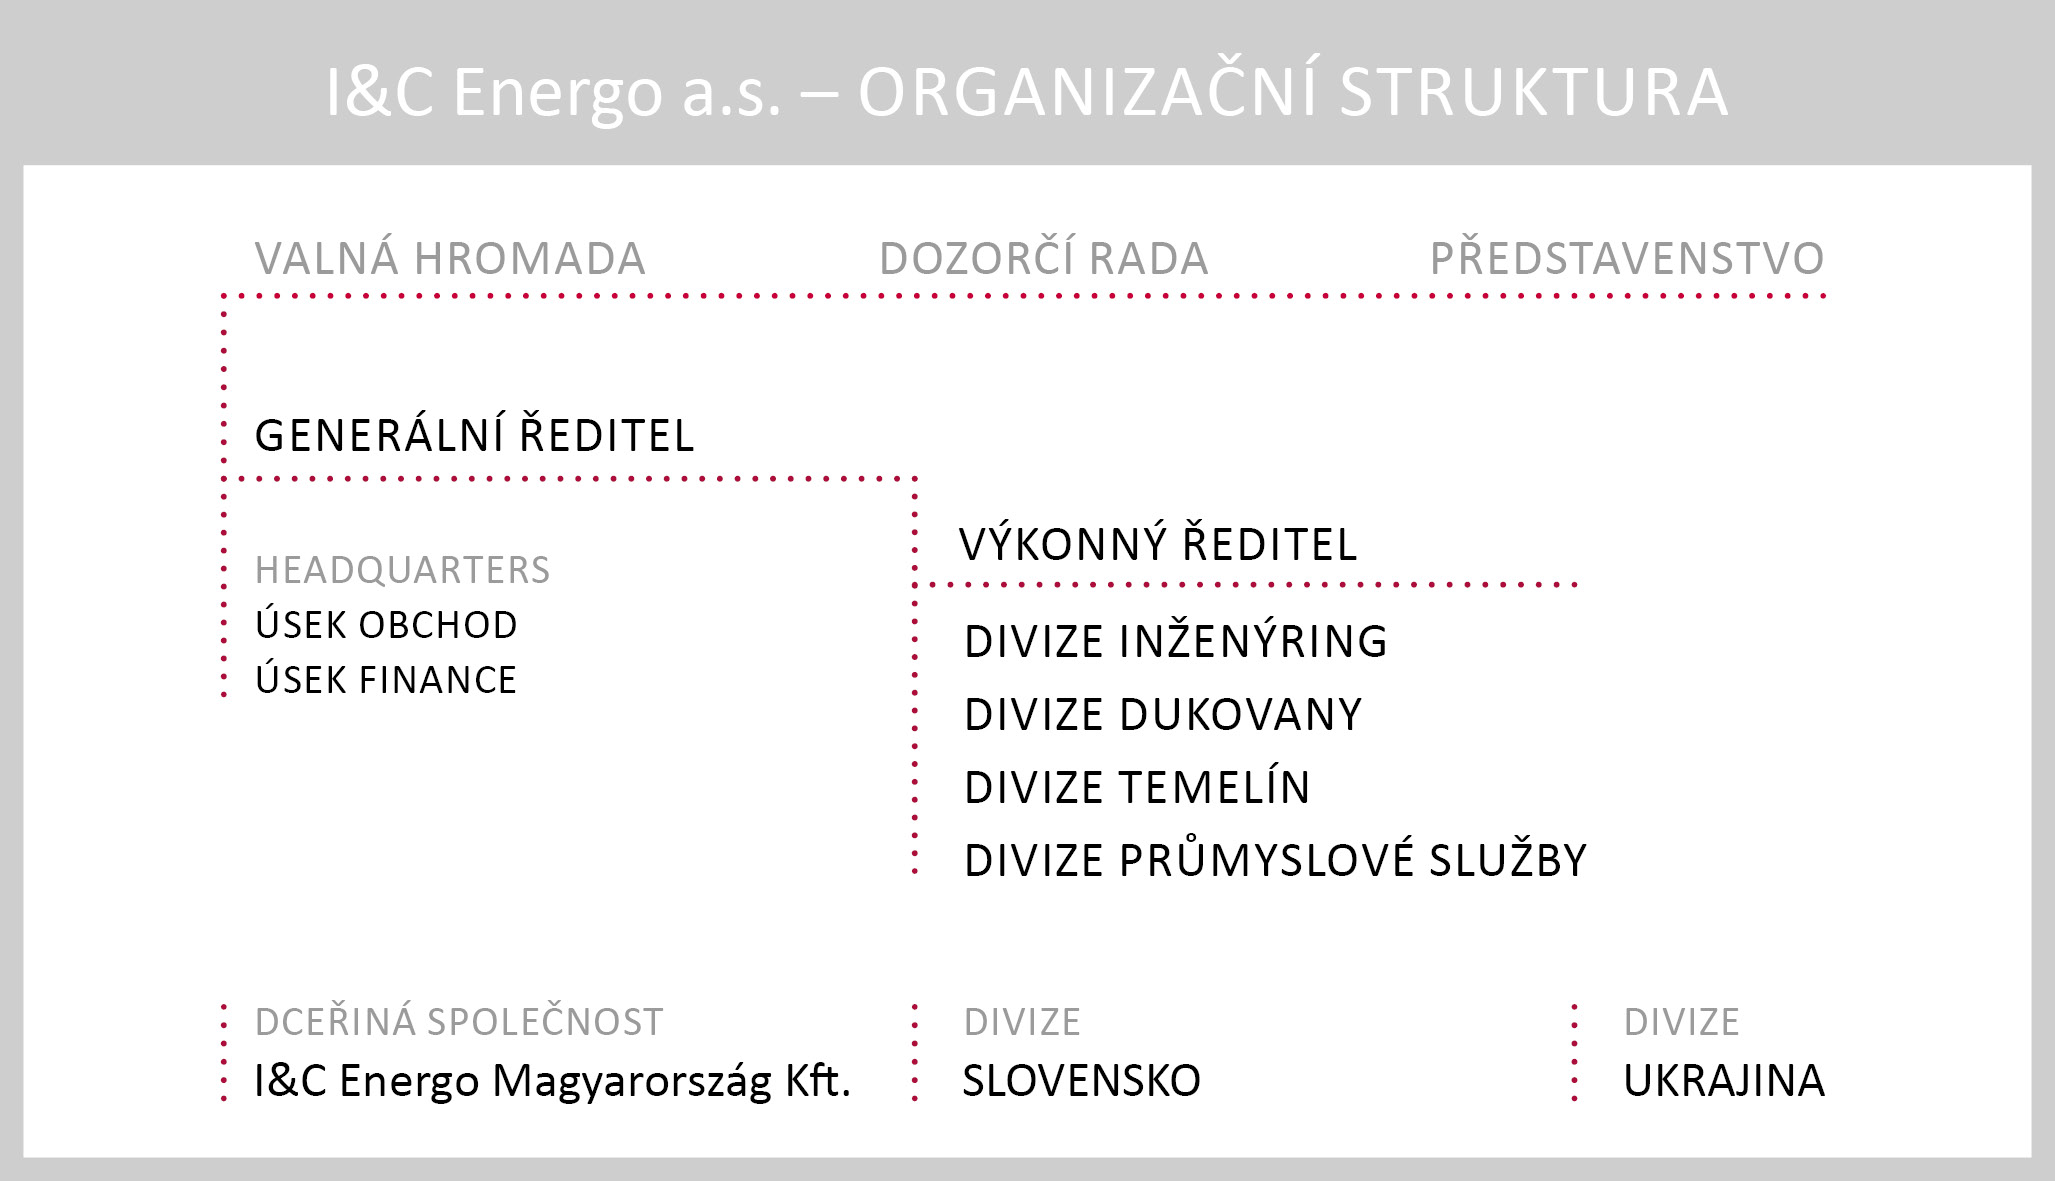 ic_energo_organizacni_struktura_cz